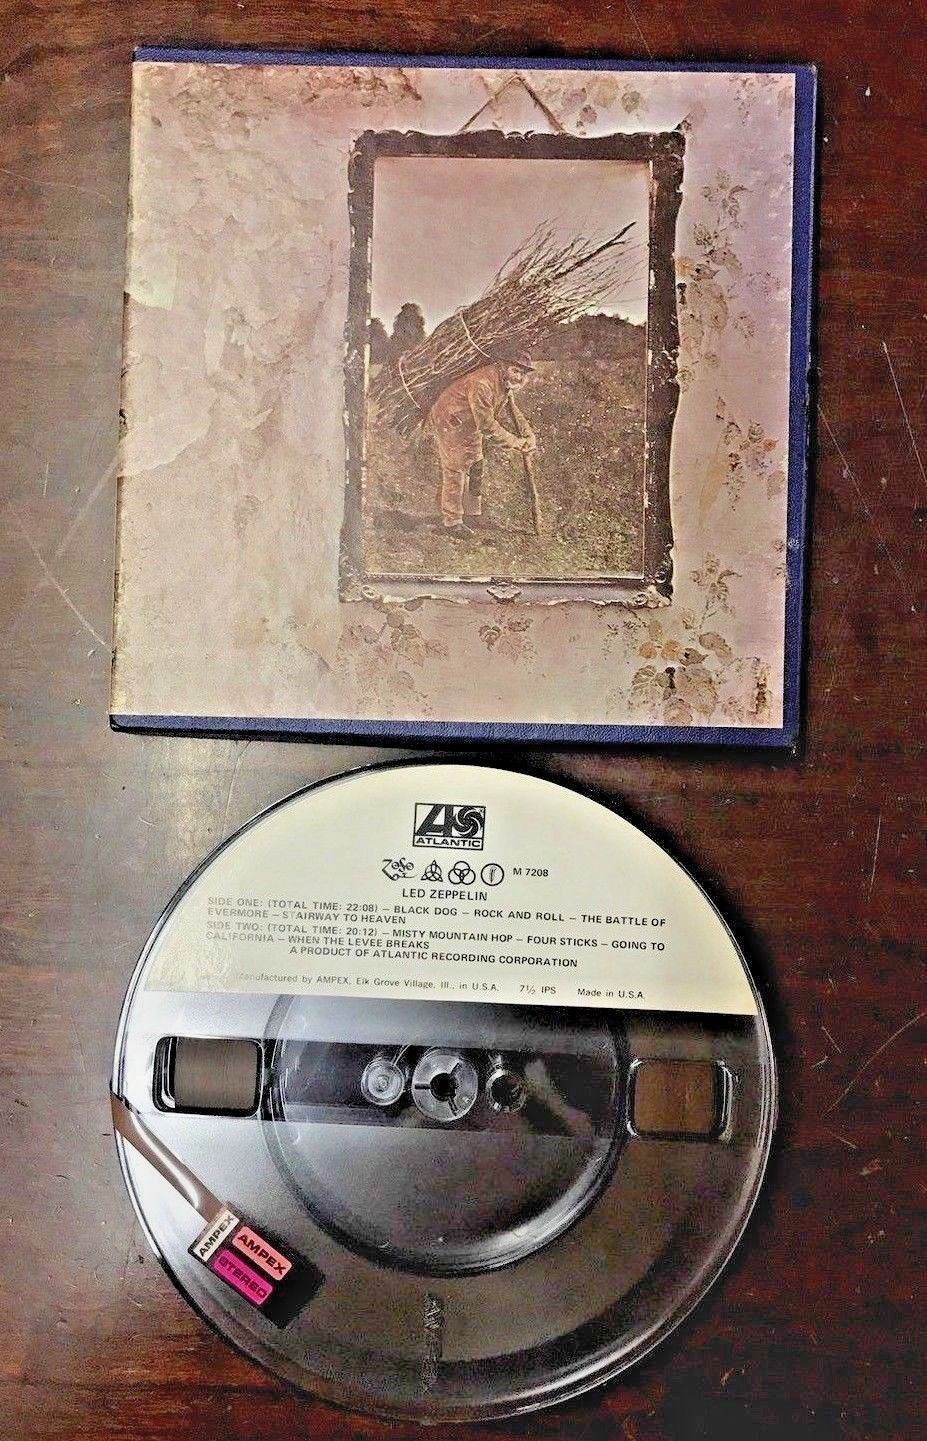  NEW - Reel to Reel tape [R2R]- Led Zeppelin ZOSO 7-1/2 ips  Atlantic # M 7208. - auction details